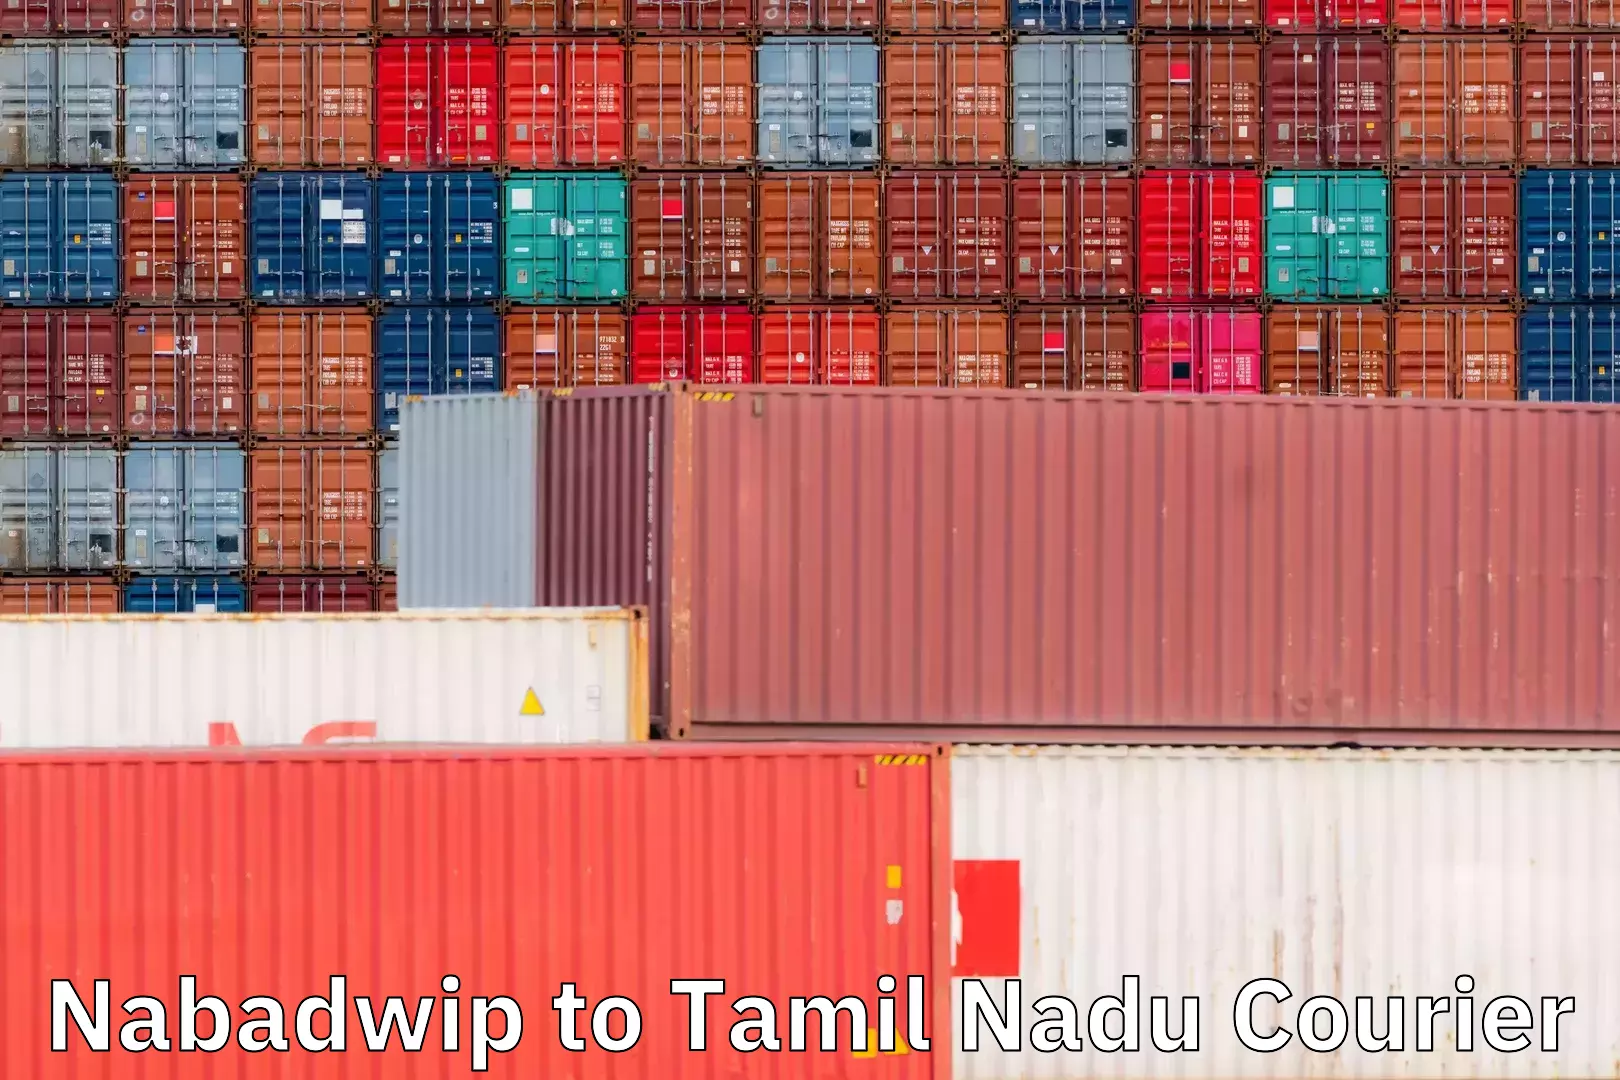 Customer-centric shipping Nabadwip to Tamil Nadu